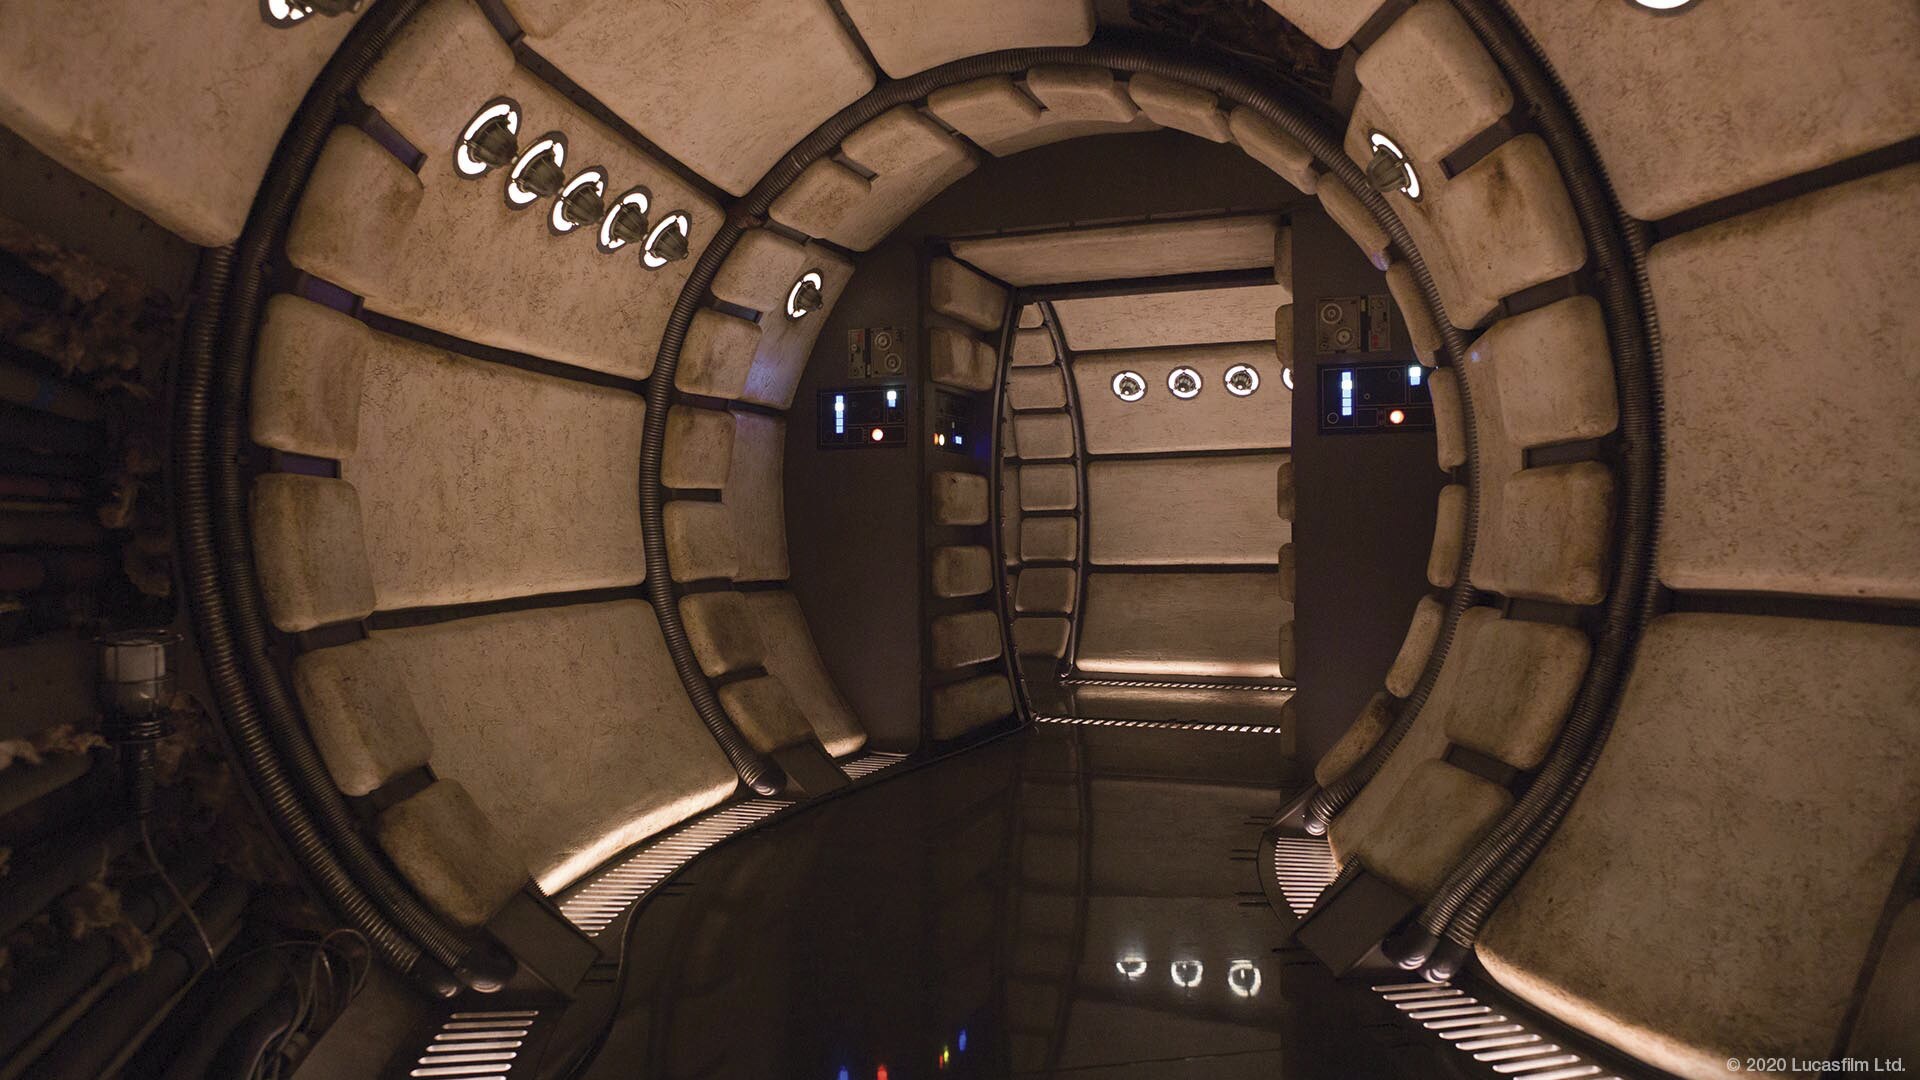 Star Wars virtual background: The Millennium Falcon